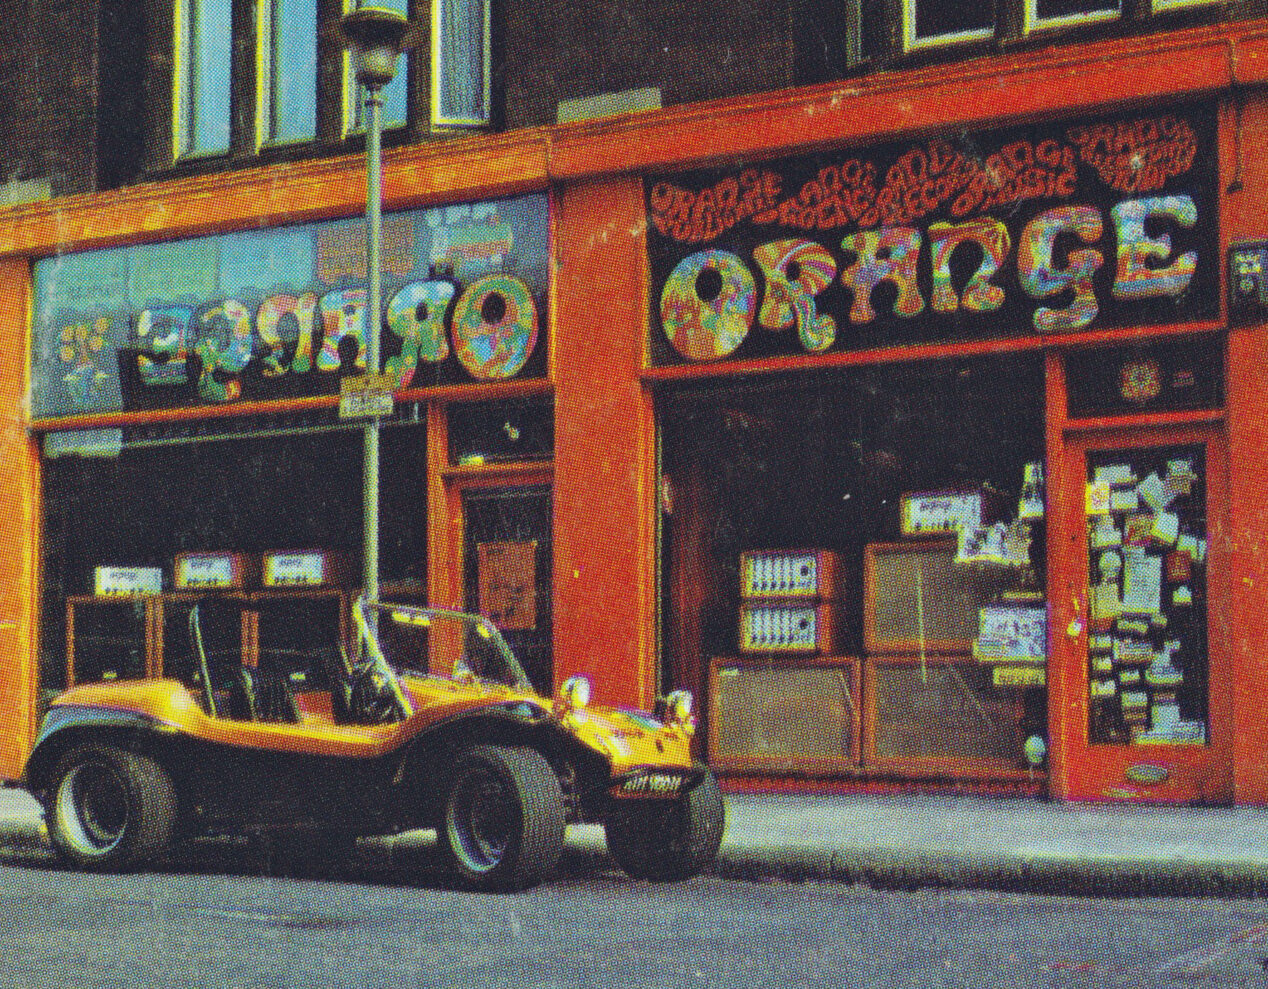 Orange Amps shop in London